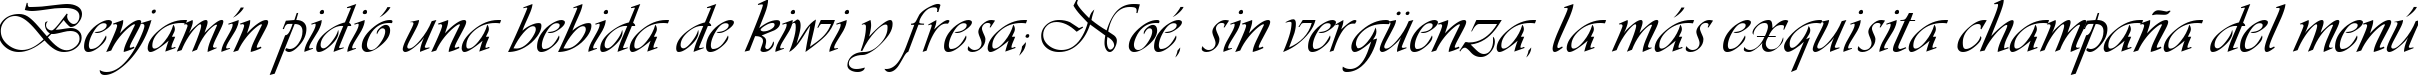 Пример написания шрифтом Vivacious текста на испанском